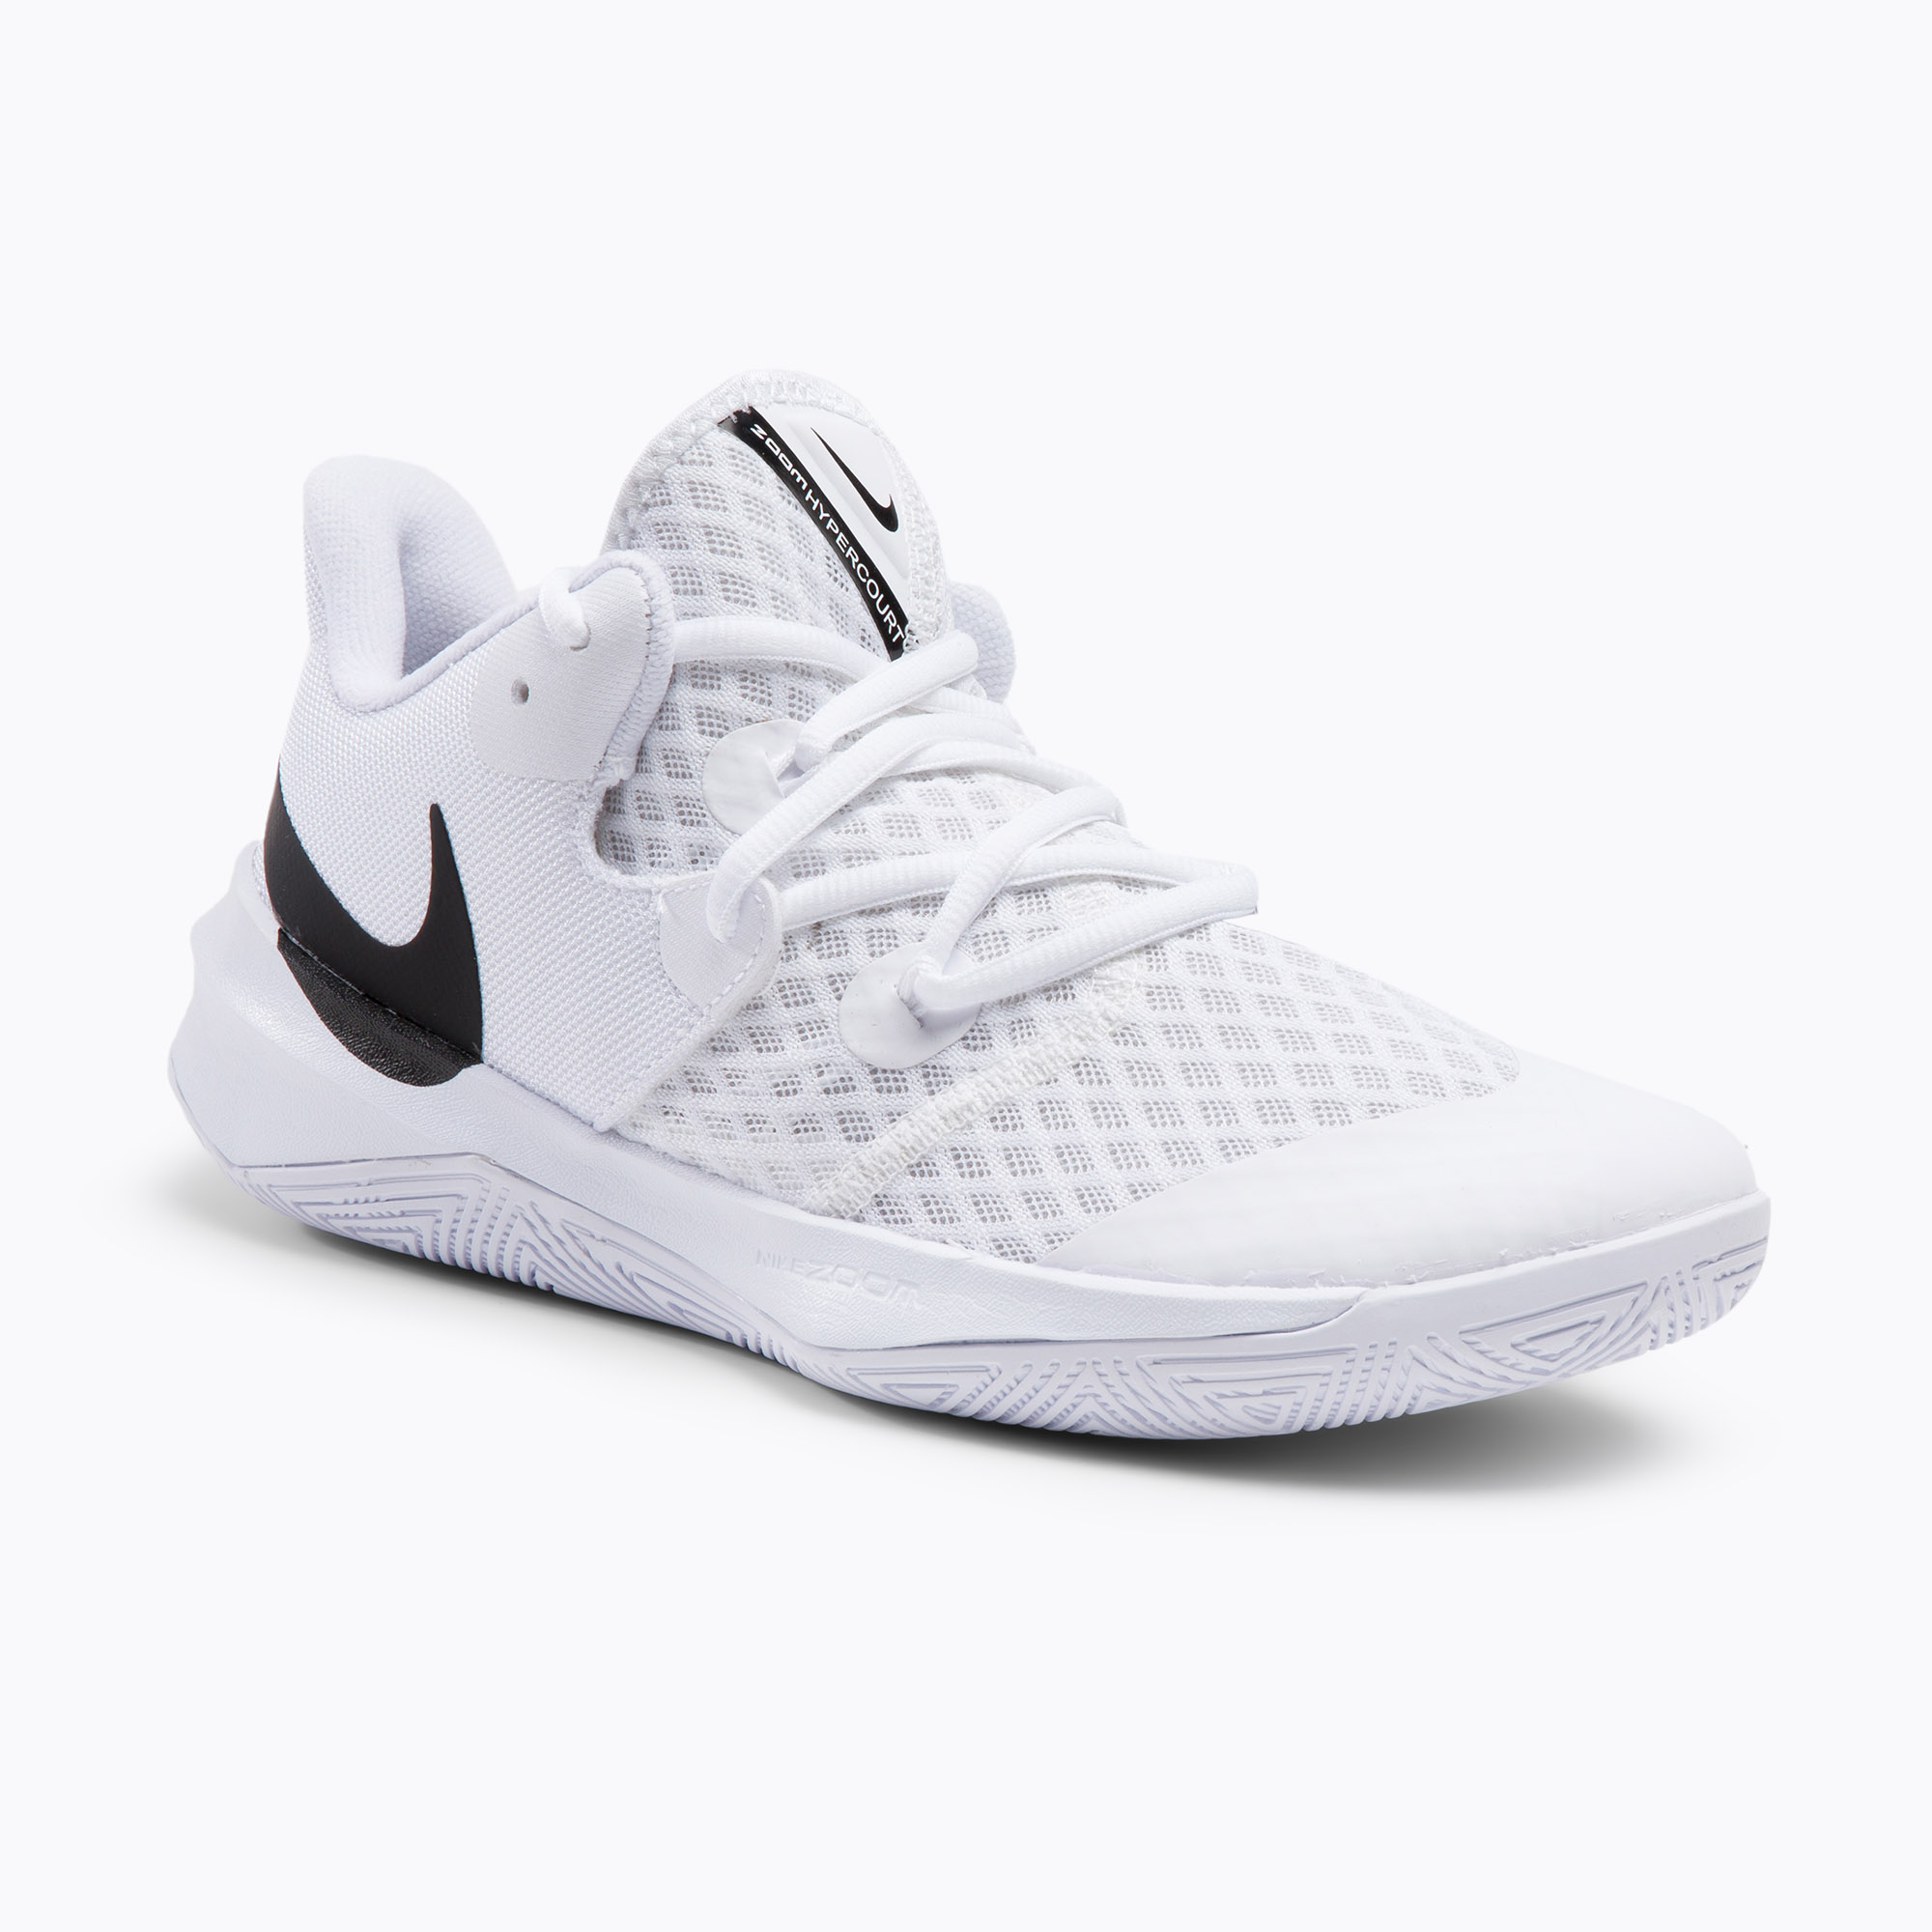 Volejbalová obuv Nike Zoom Hyperspeed Court white CI2964-100